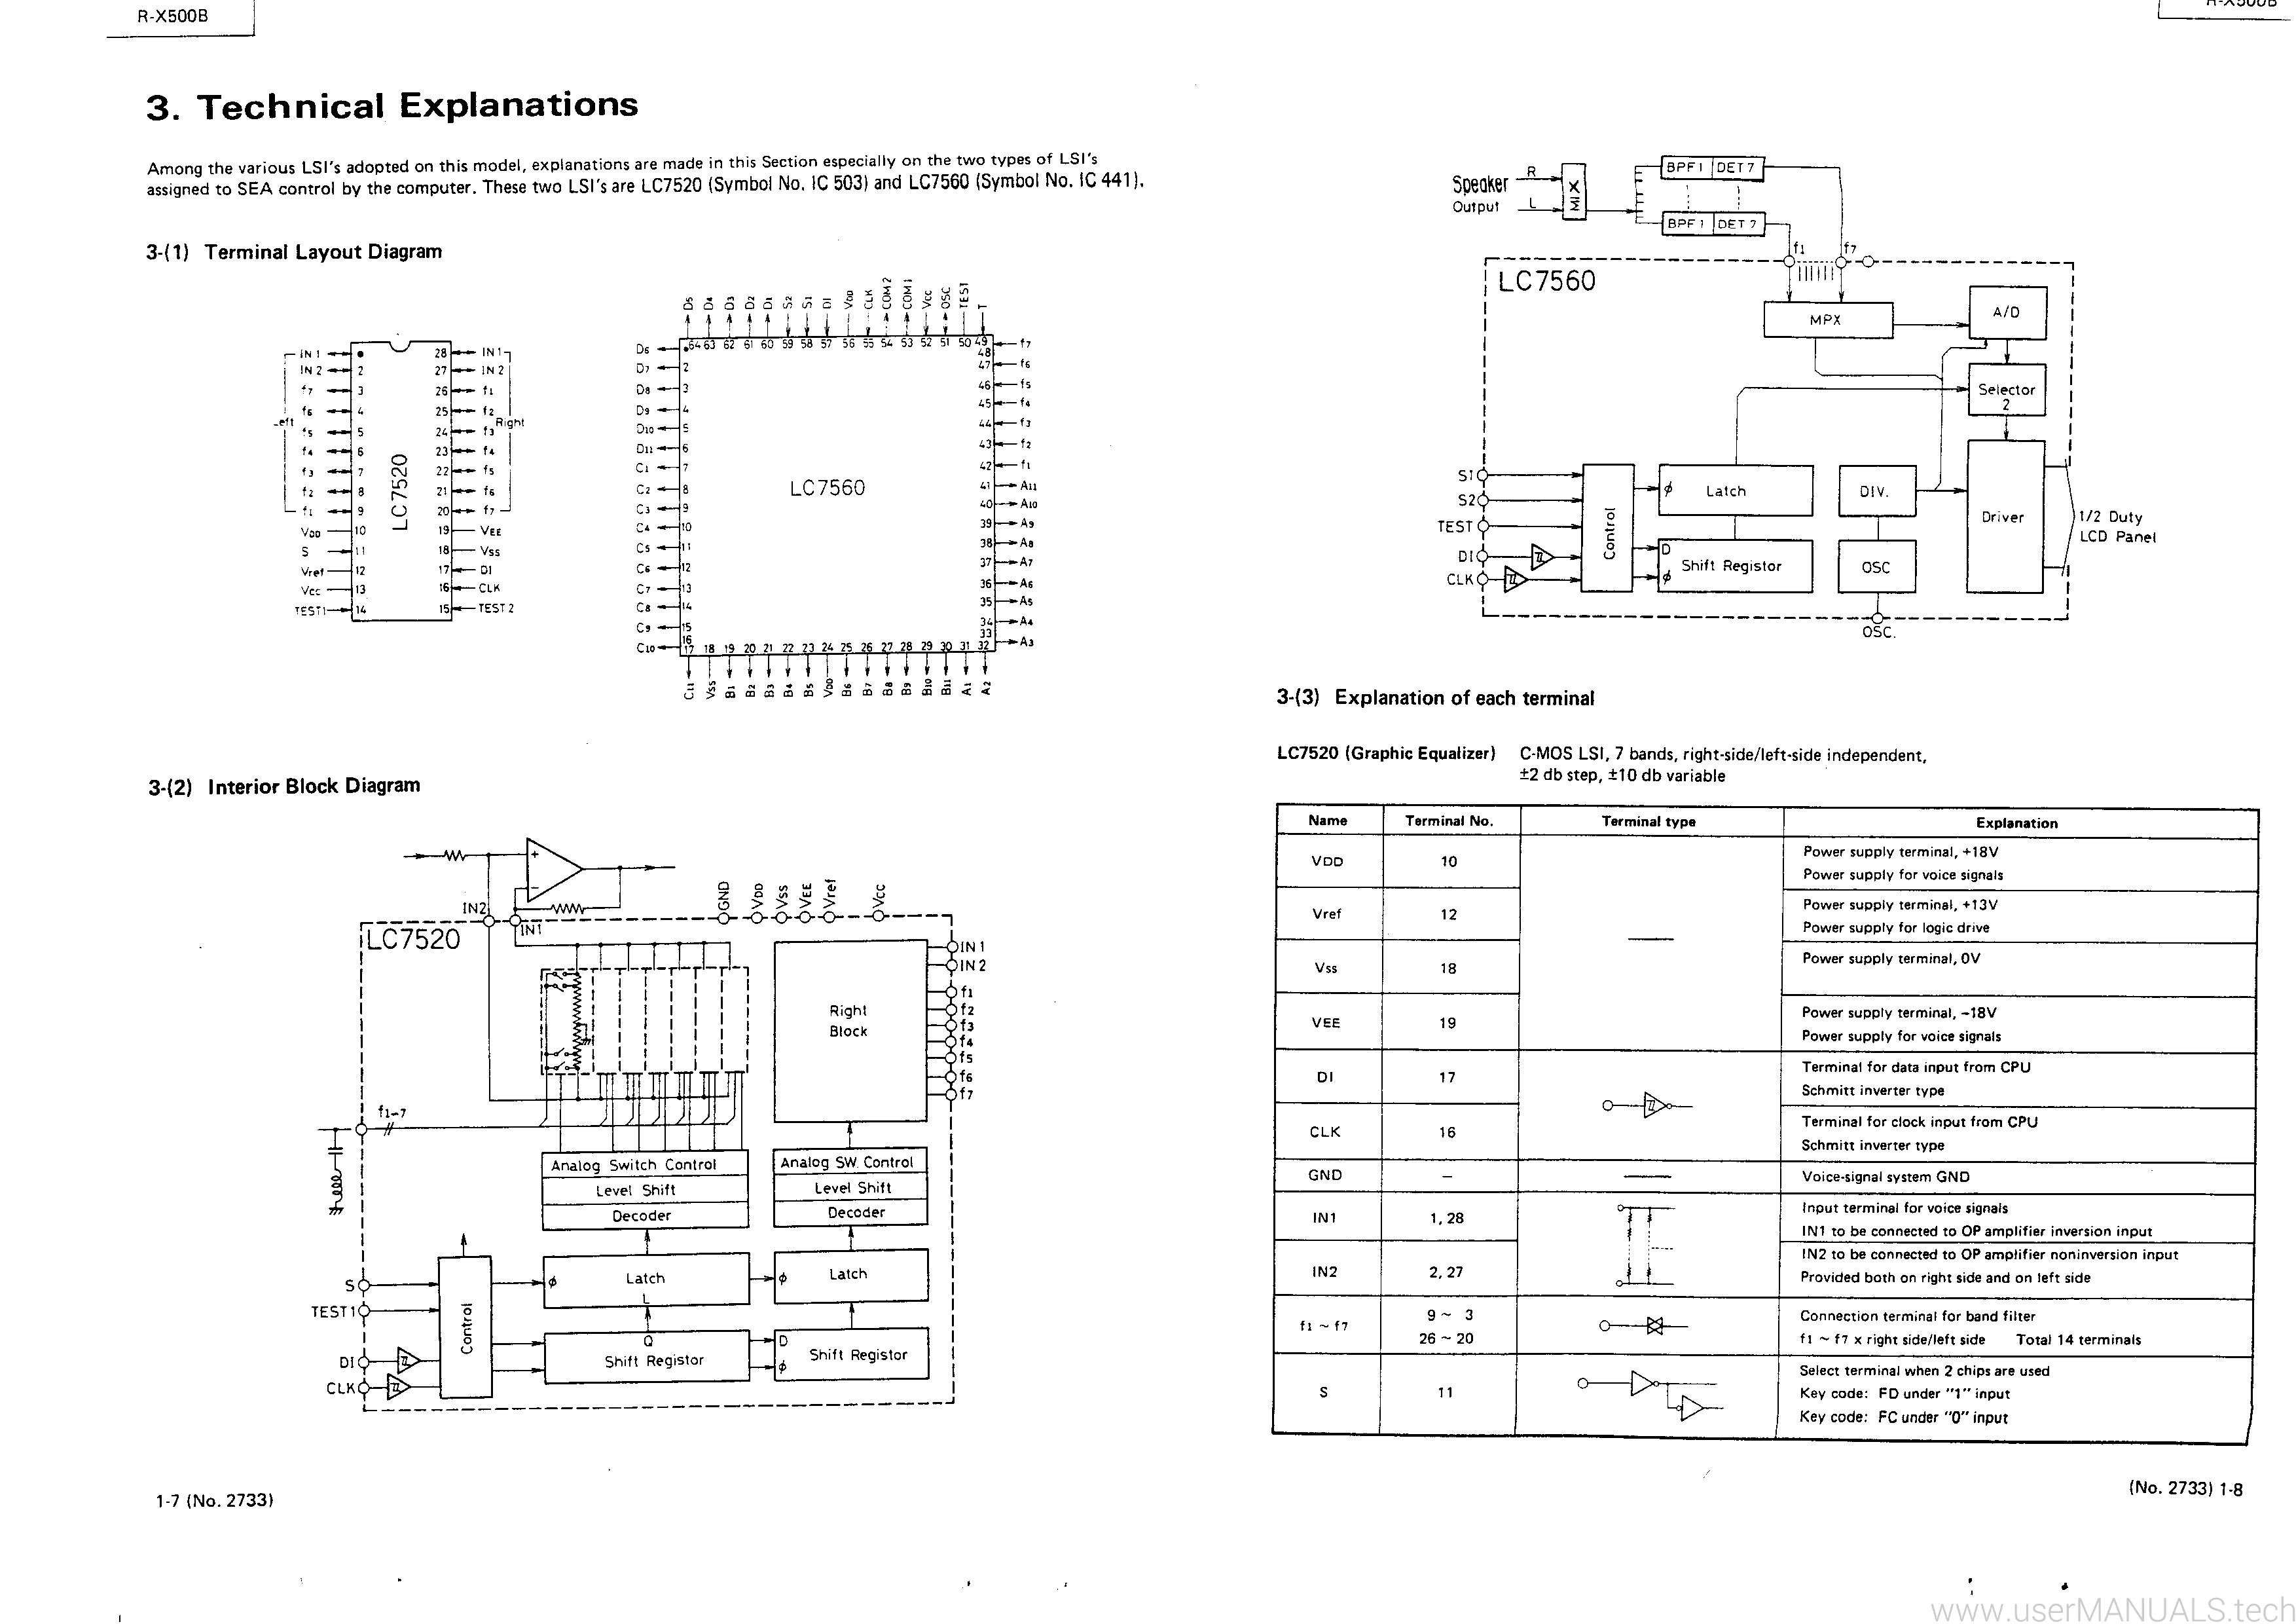 JVC R X500 Service Manual